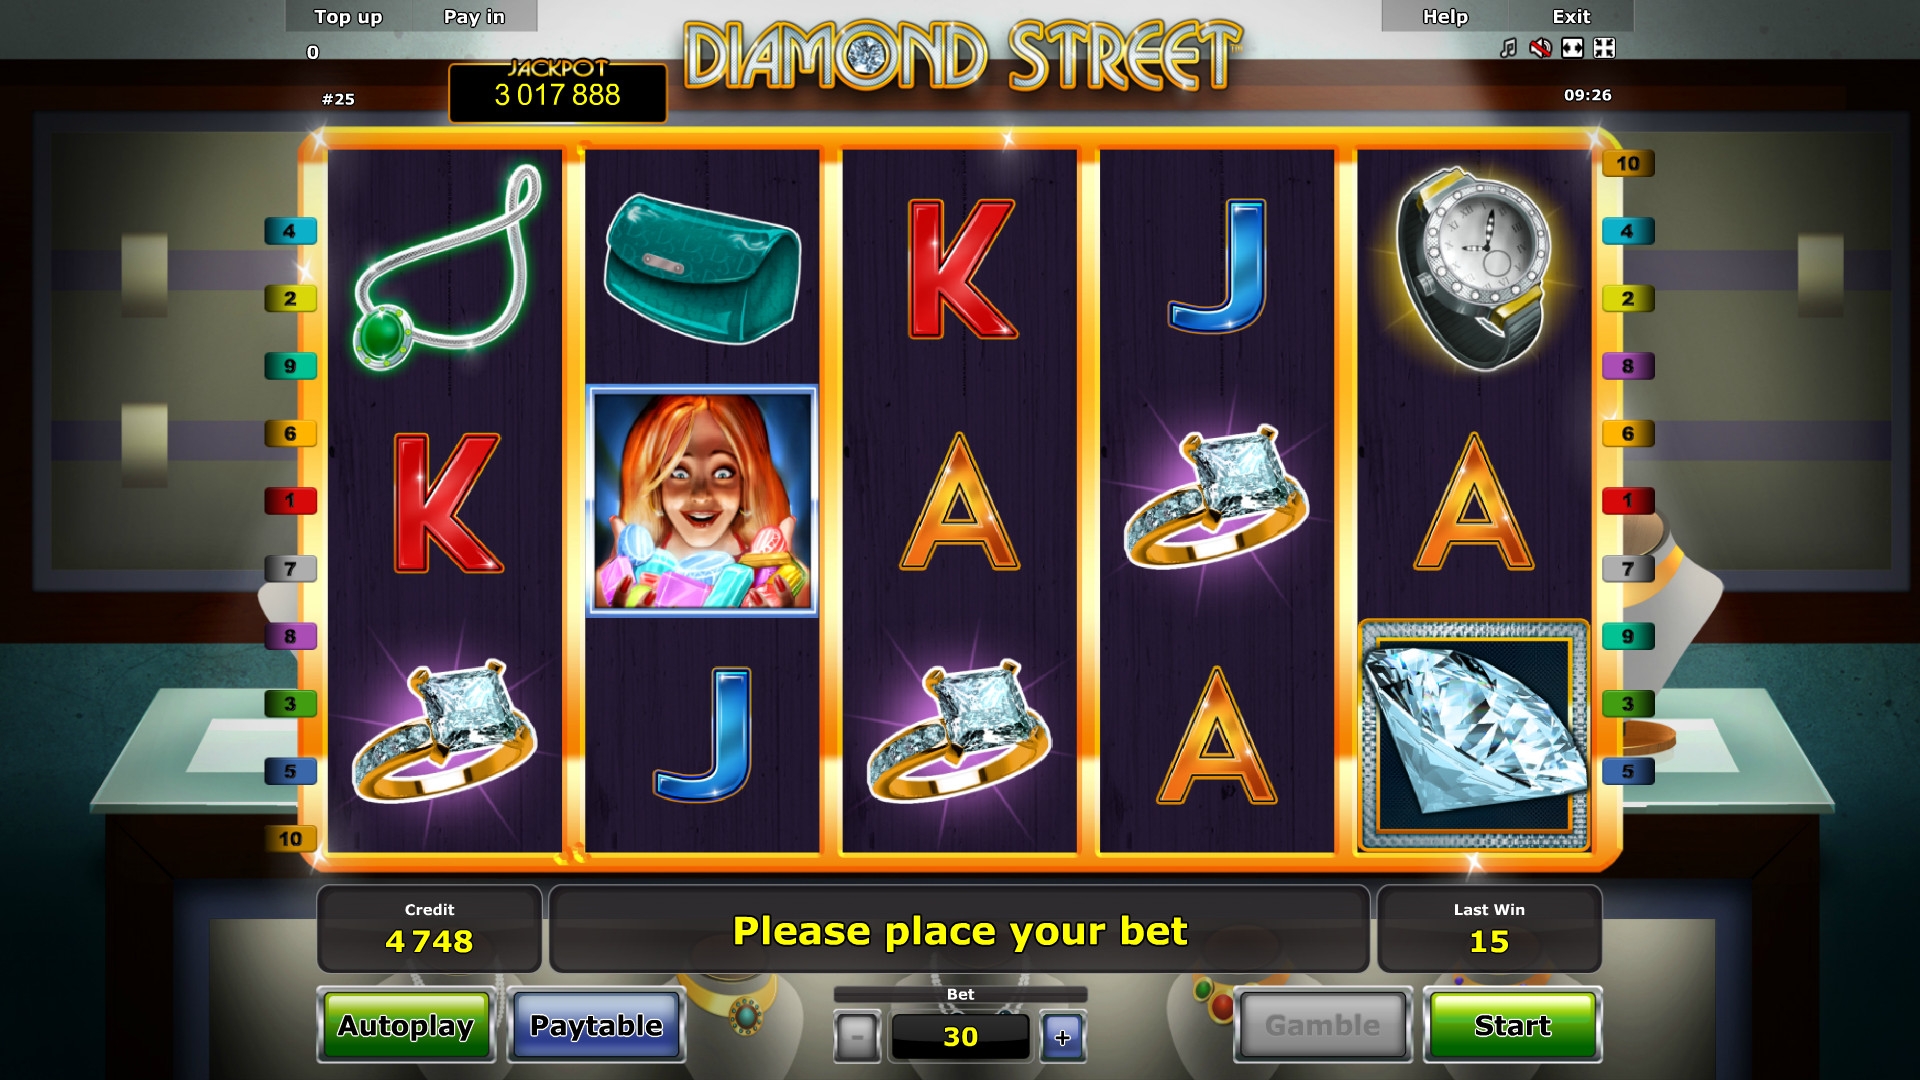 Diamond Street (Diamond Street) from category Slots